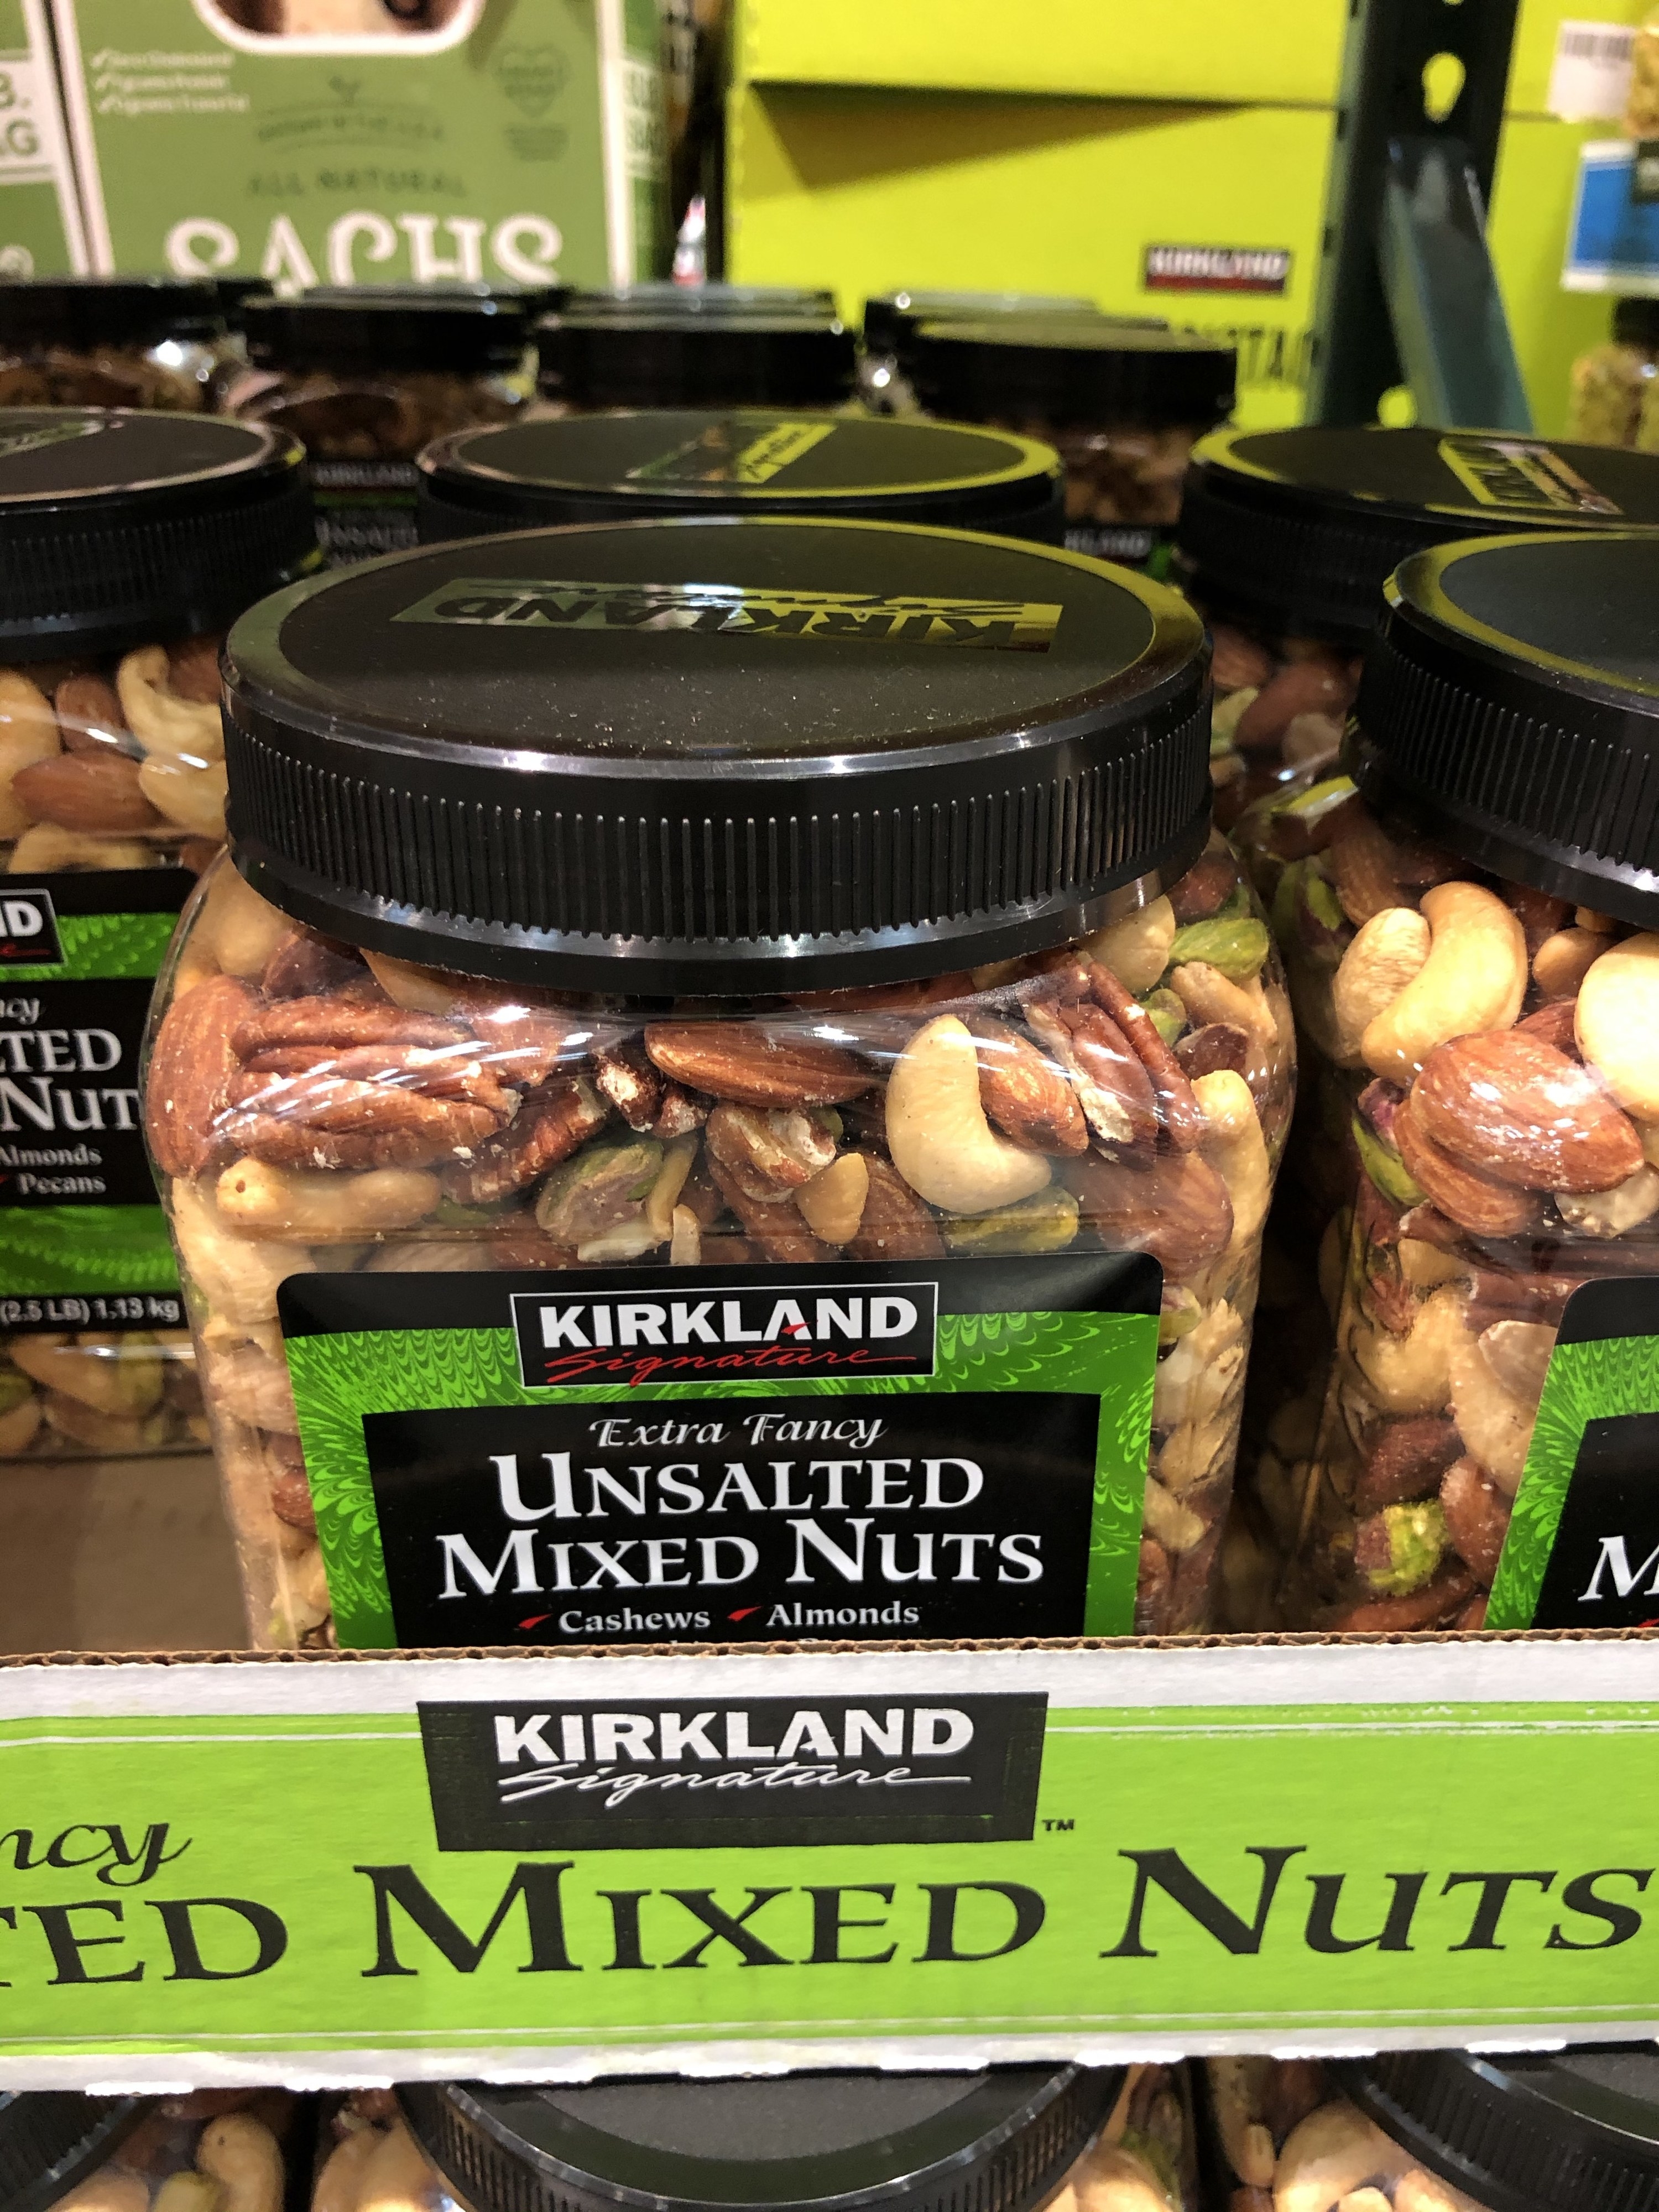 A tub of Kirkland mixed nuts